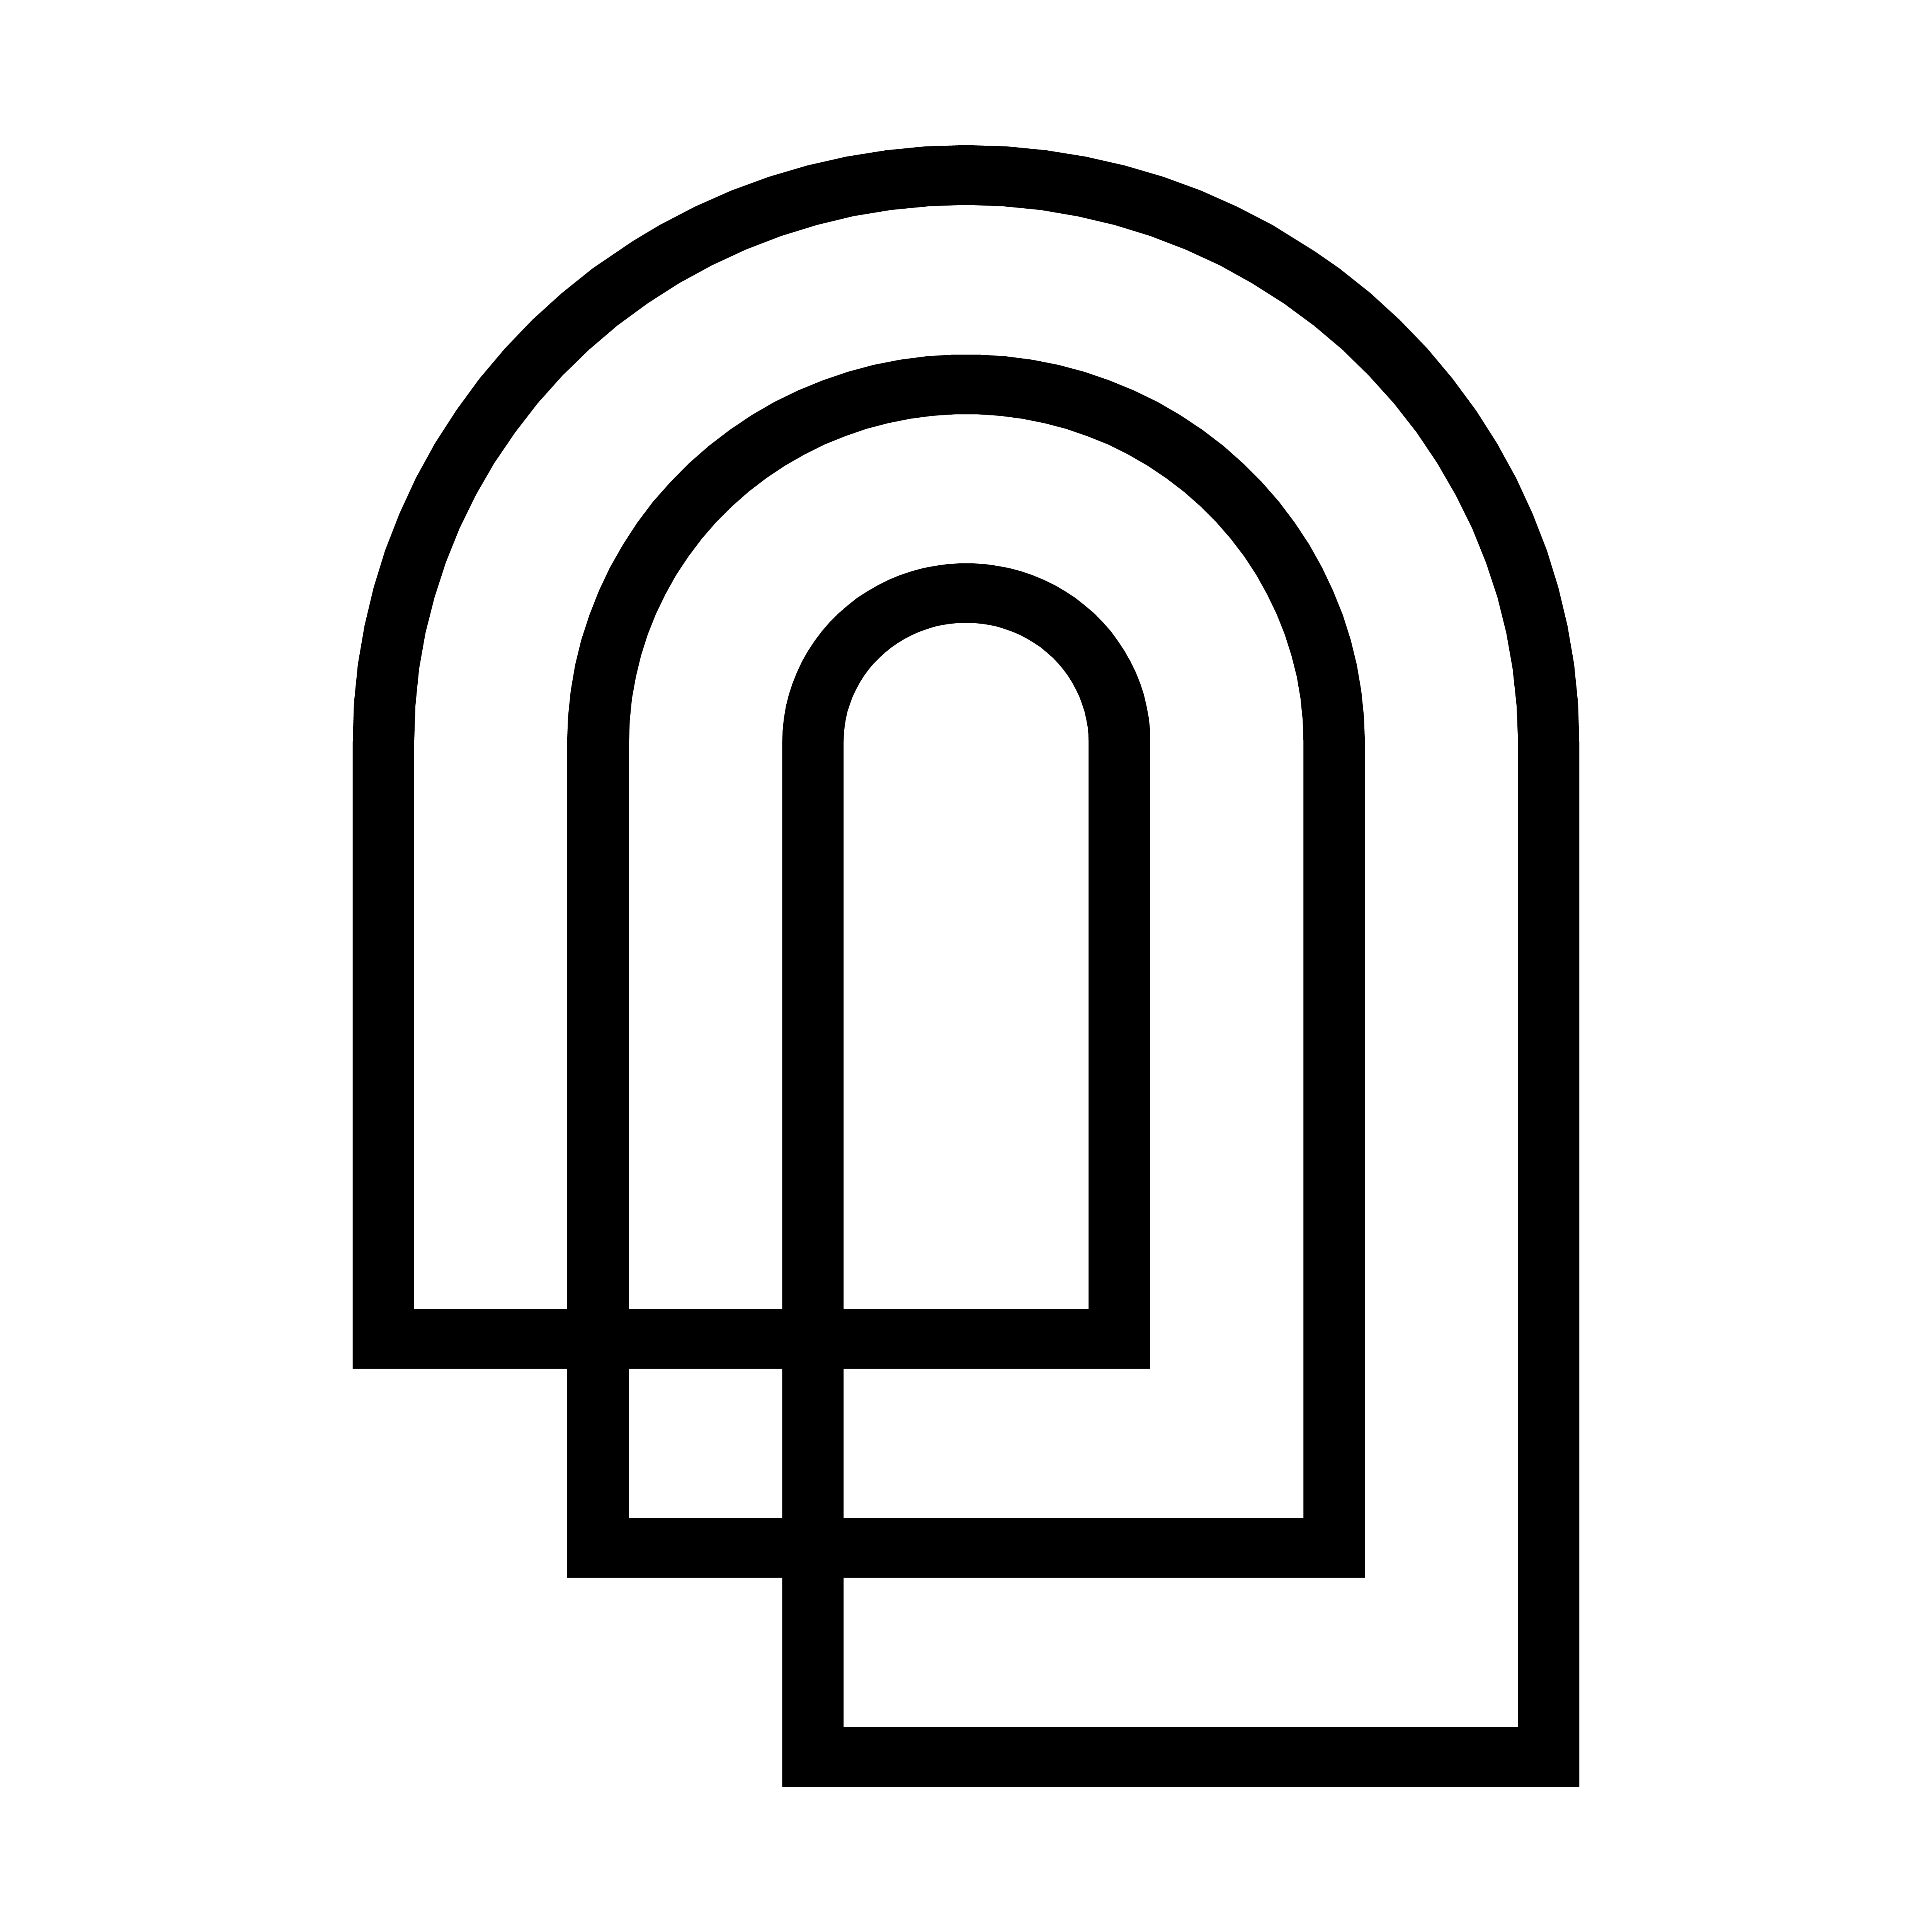 LRH logo